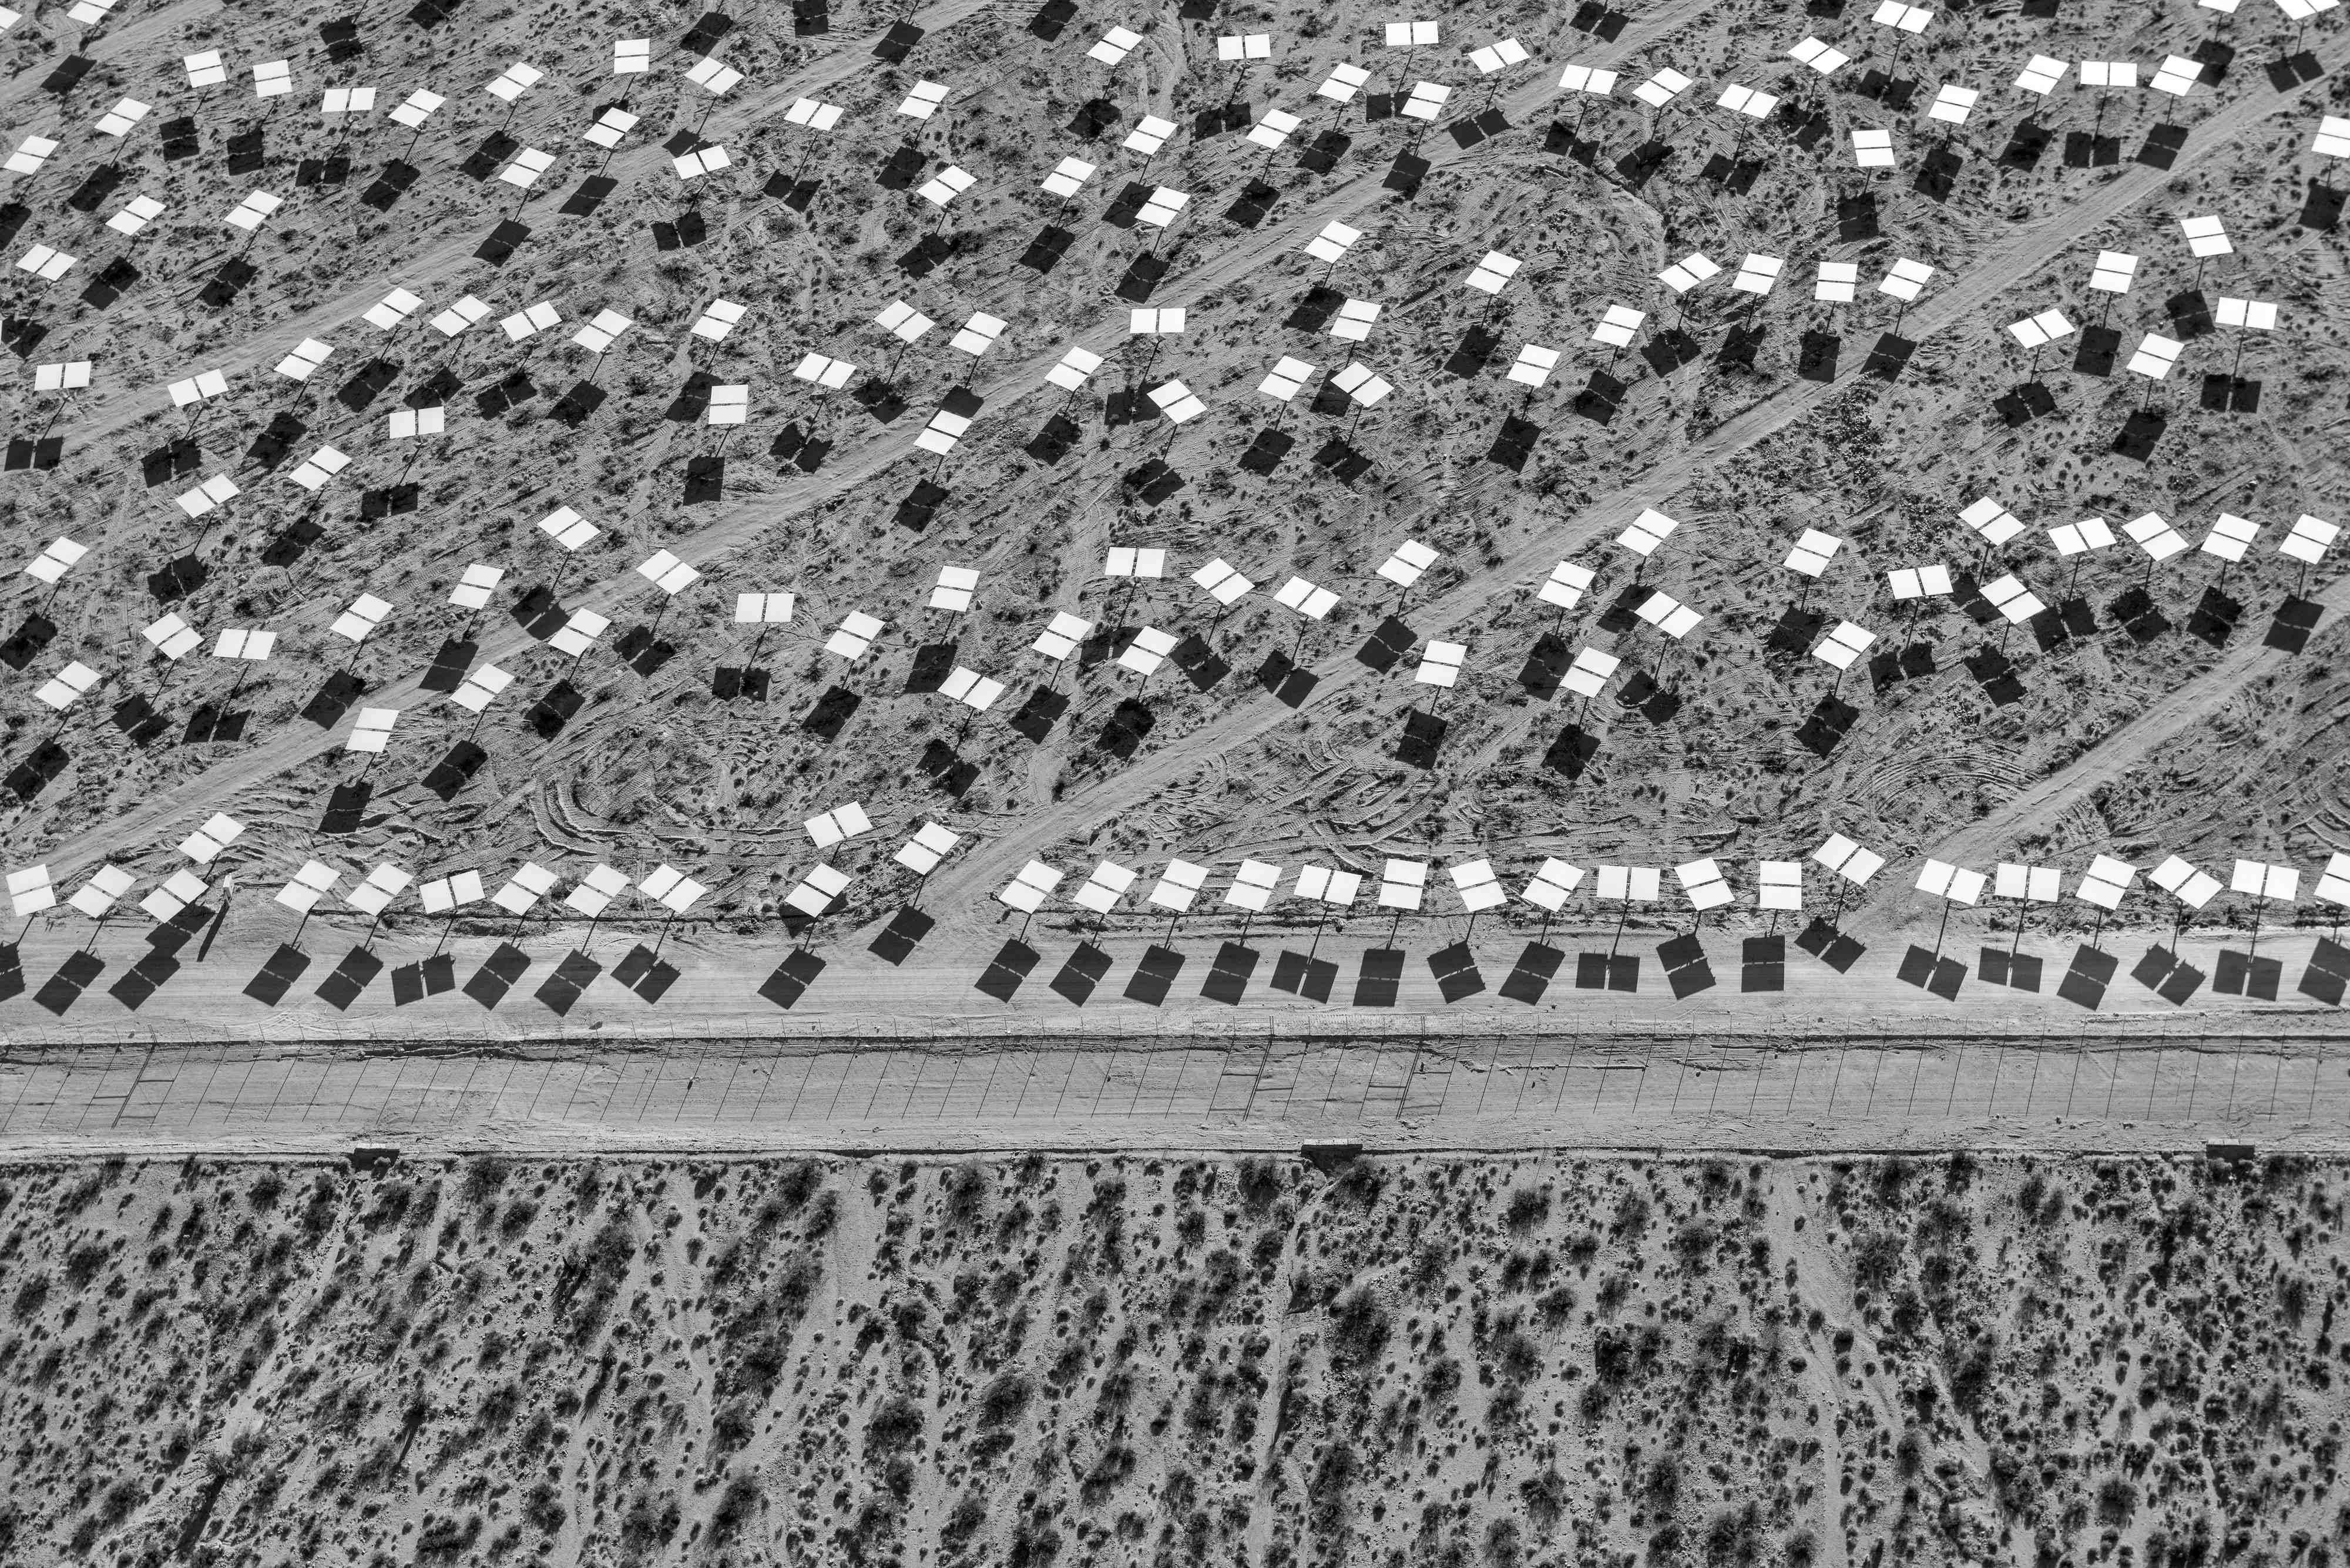 Jamey Stillings Black and White Photograph - Evolution of Ivanpah Solar, #10006, 25 June 2013